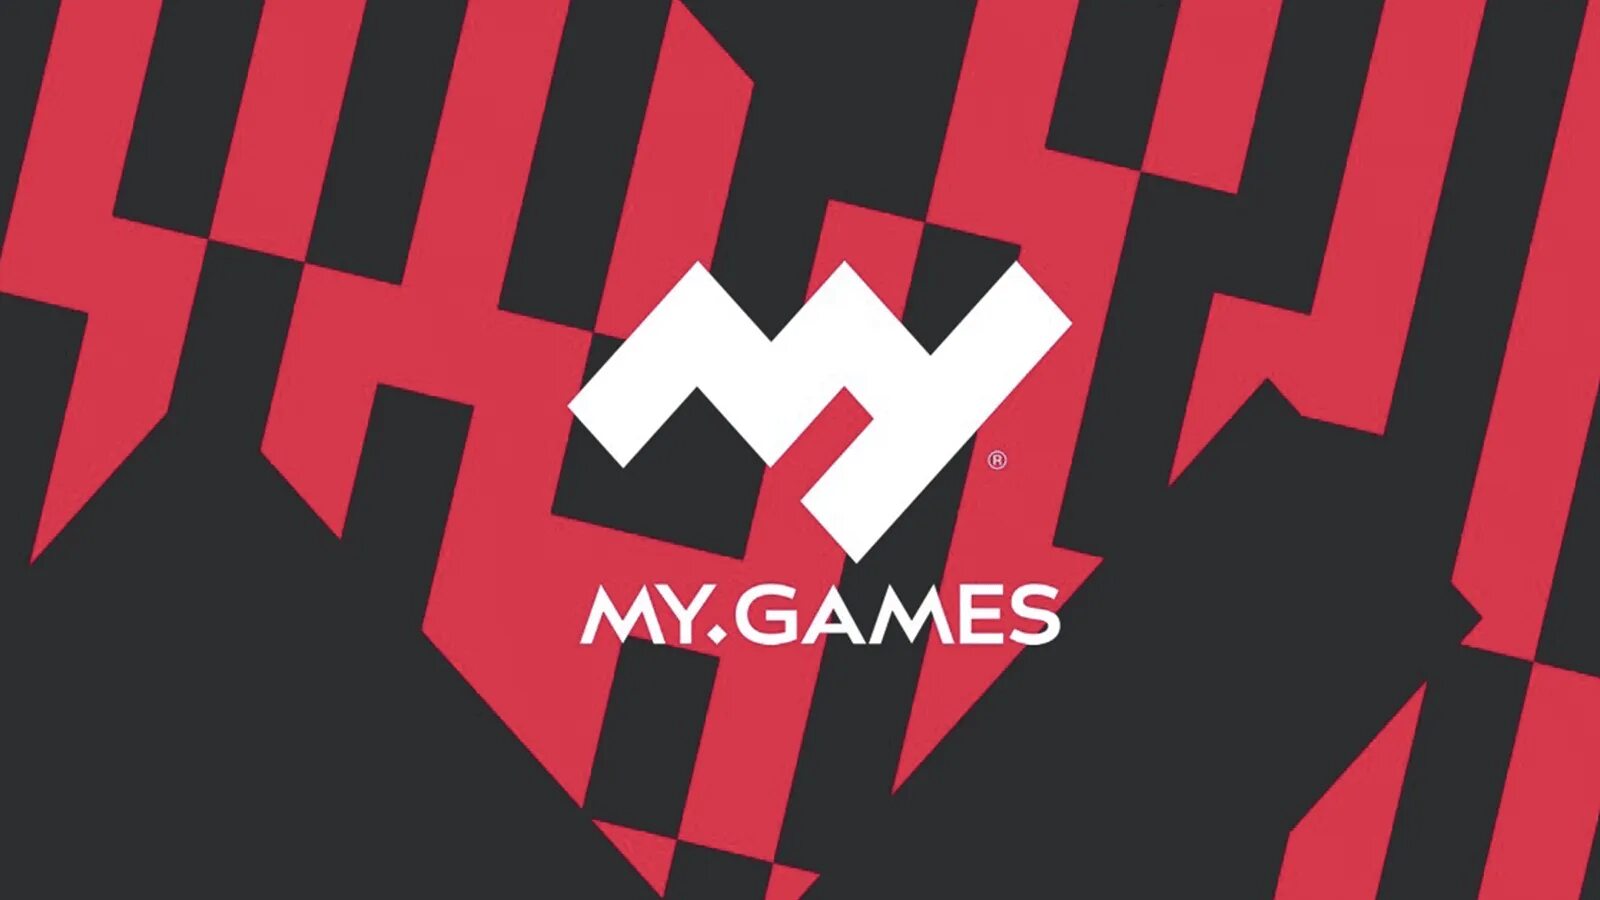 My games. My games logo. My games игровой центр логотип. Бренд game. My games центр